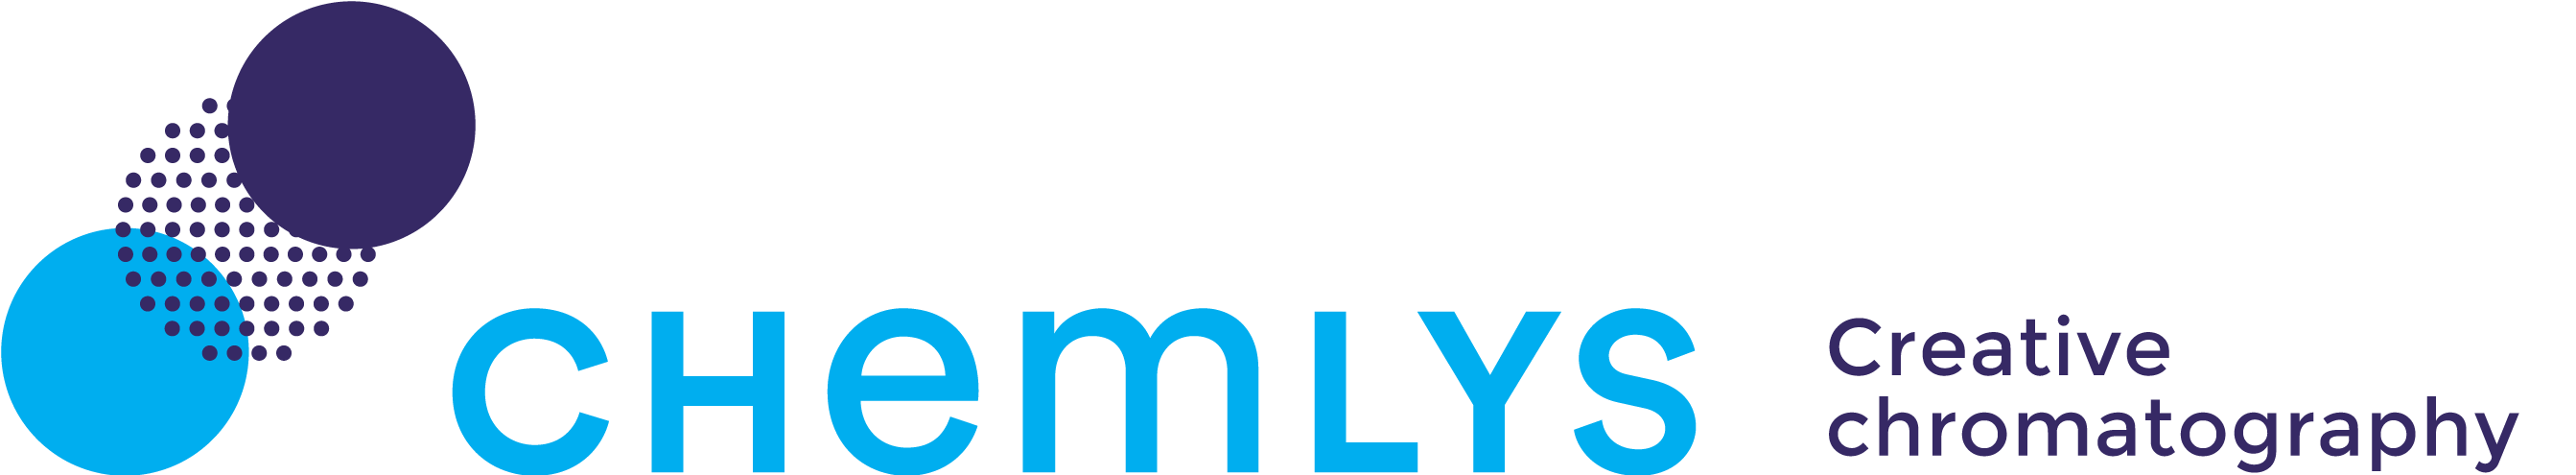 logo chemlys